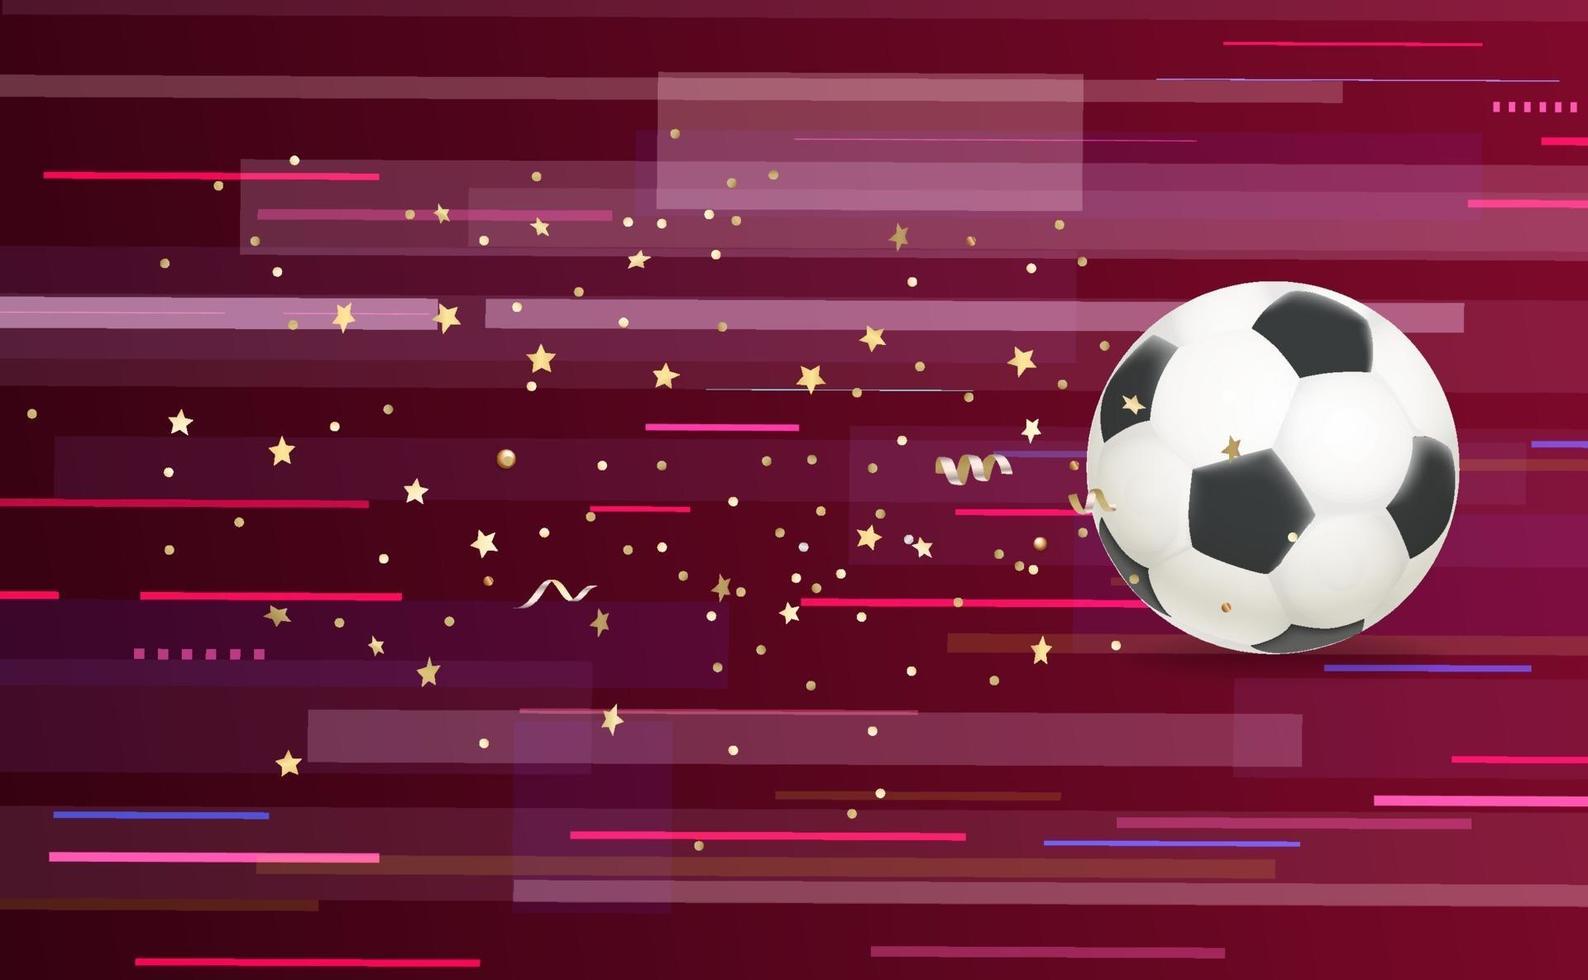 Soccer ball flying forward with confetti, vector